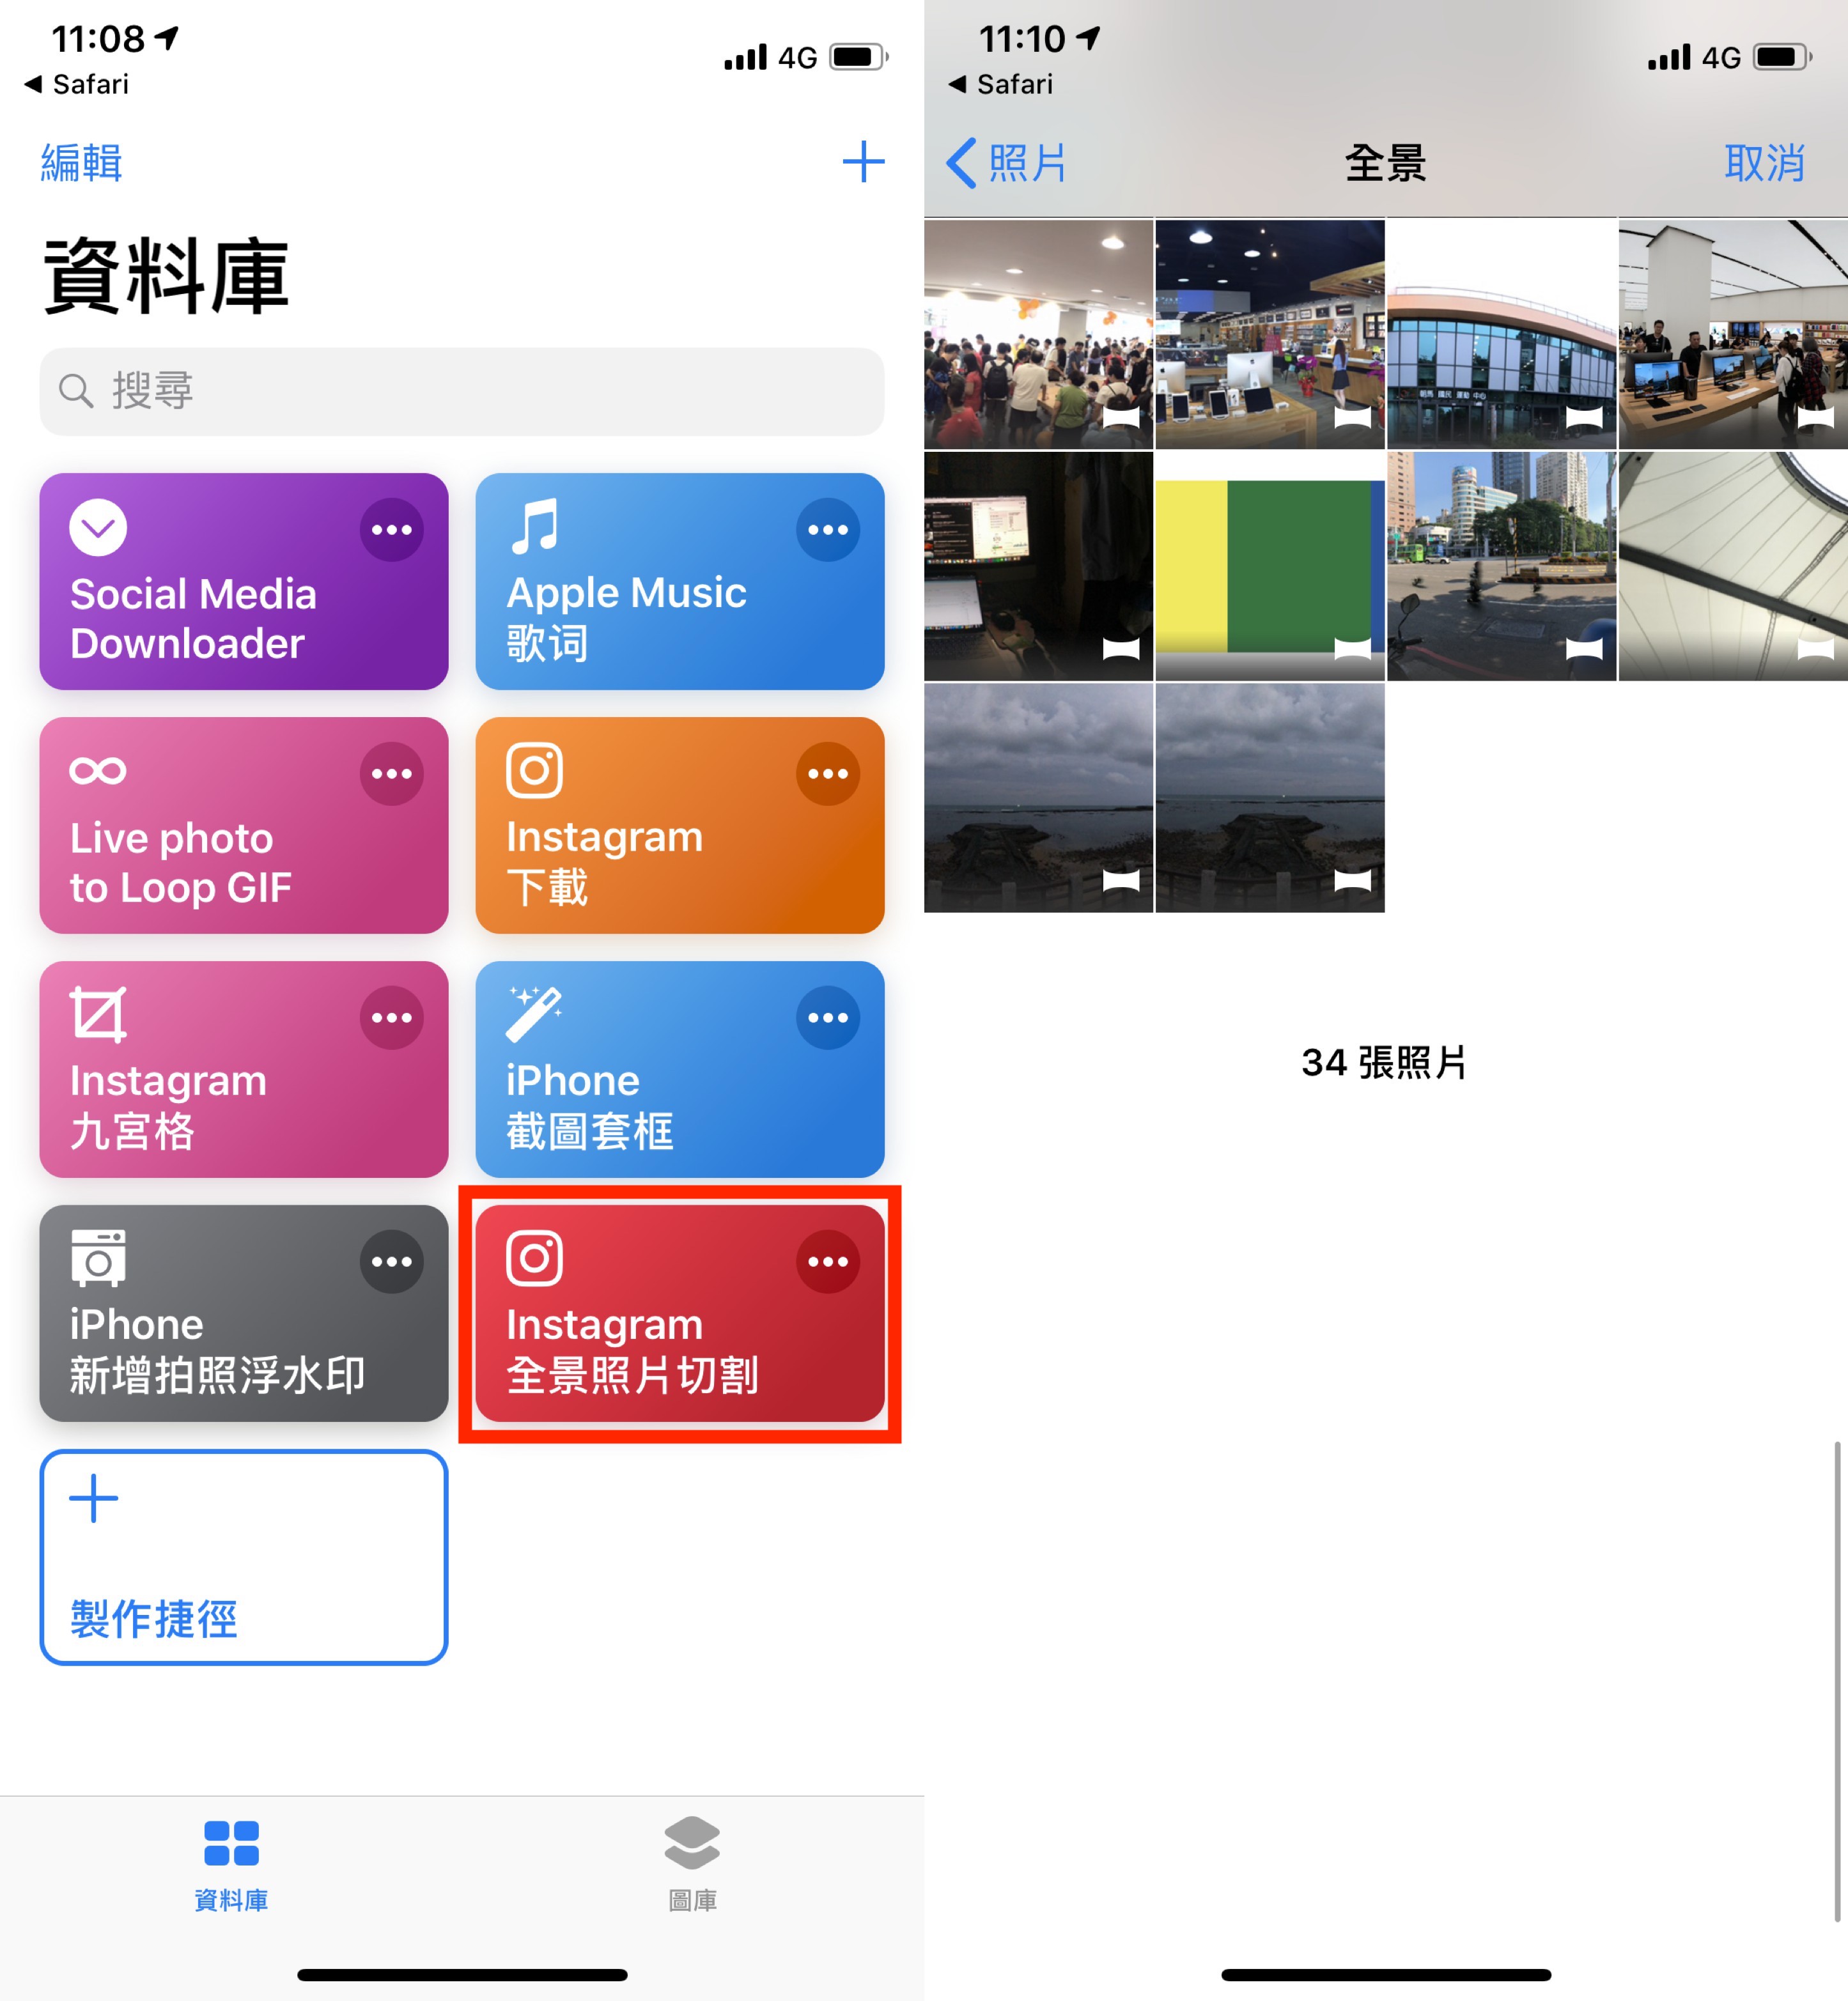 iOS 12、捷徑、全景照片、全景照片切割